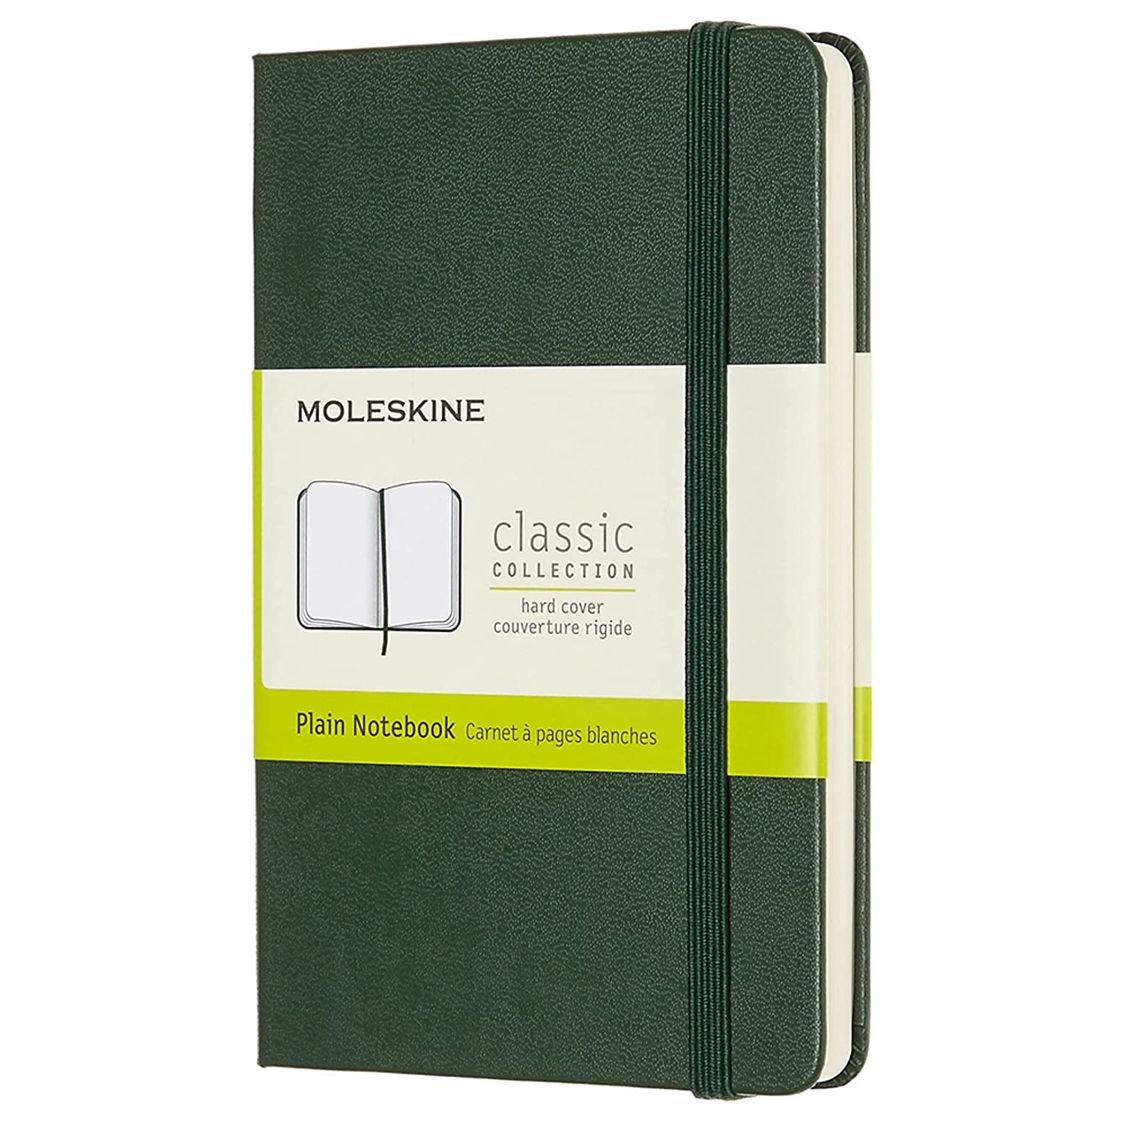 Moleskine Notebook, Large, Plain, Myrtle Green, Hard Cover(5 x 8.25)